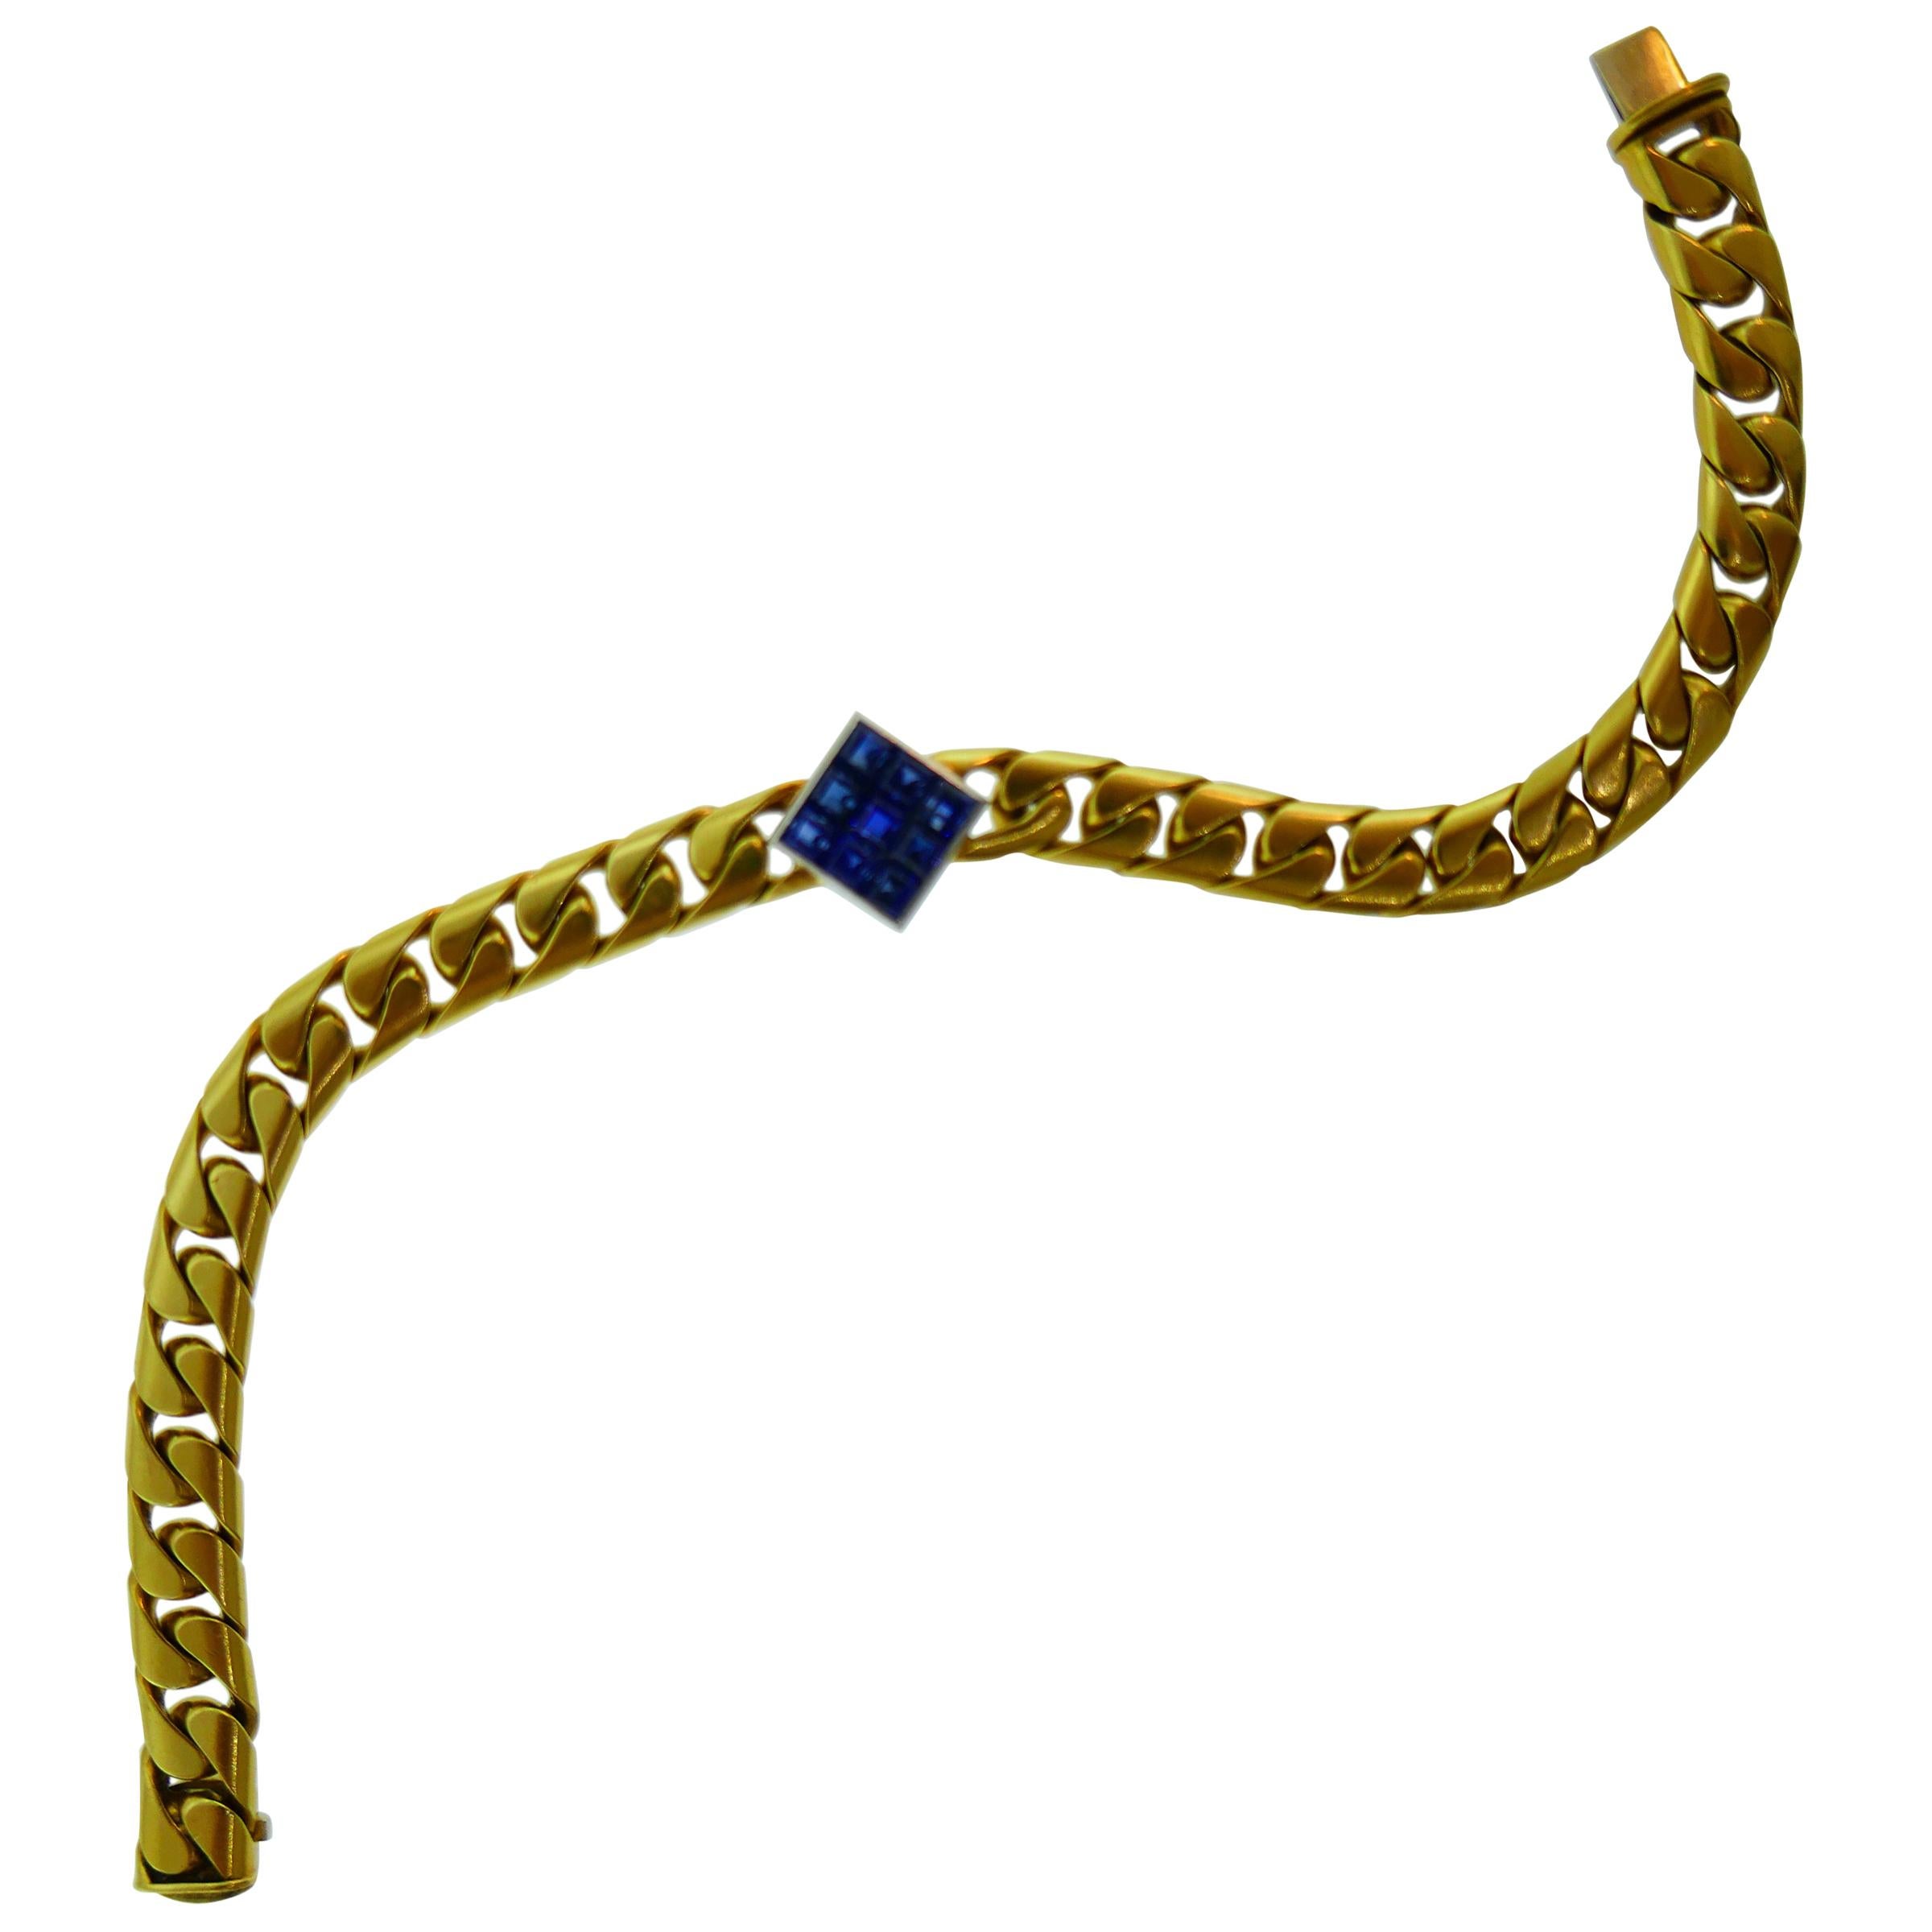 Fred Paris 18 Karat Yellow and White Gold & Sapphire Link Bracelet, circa 1980s